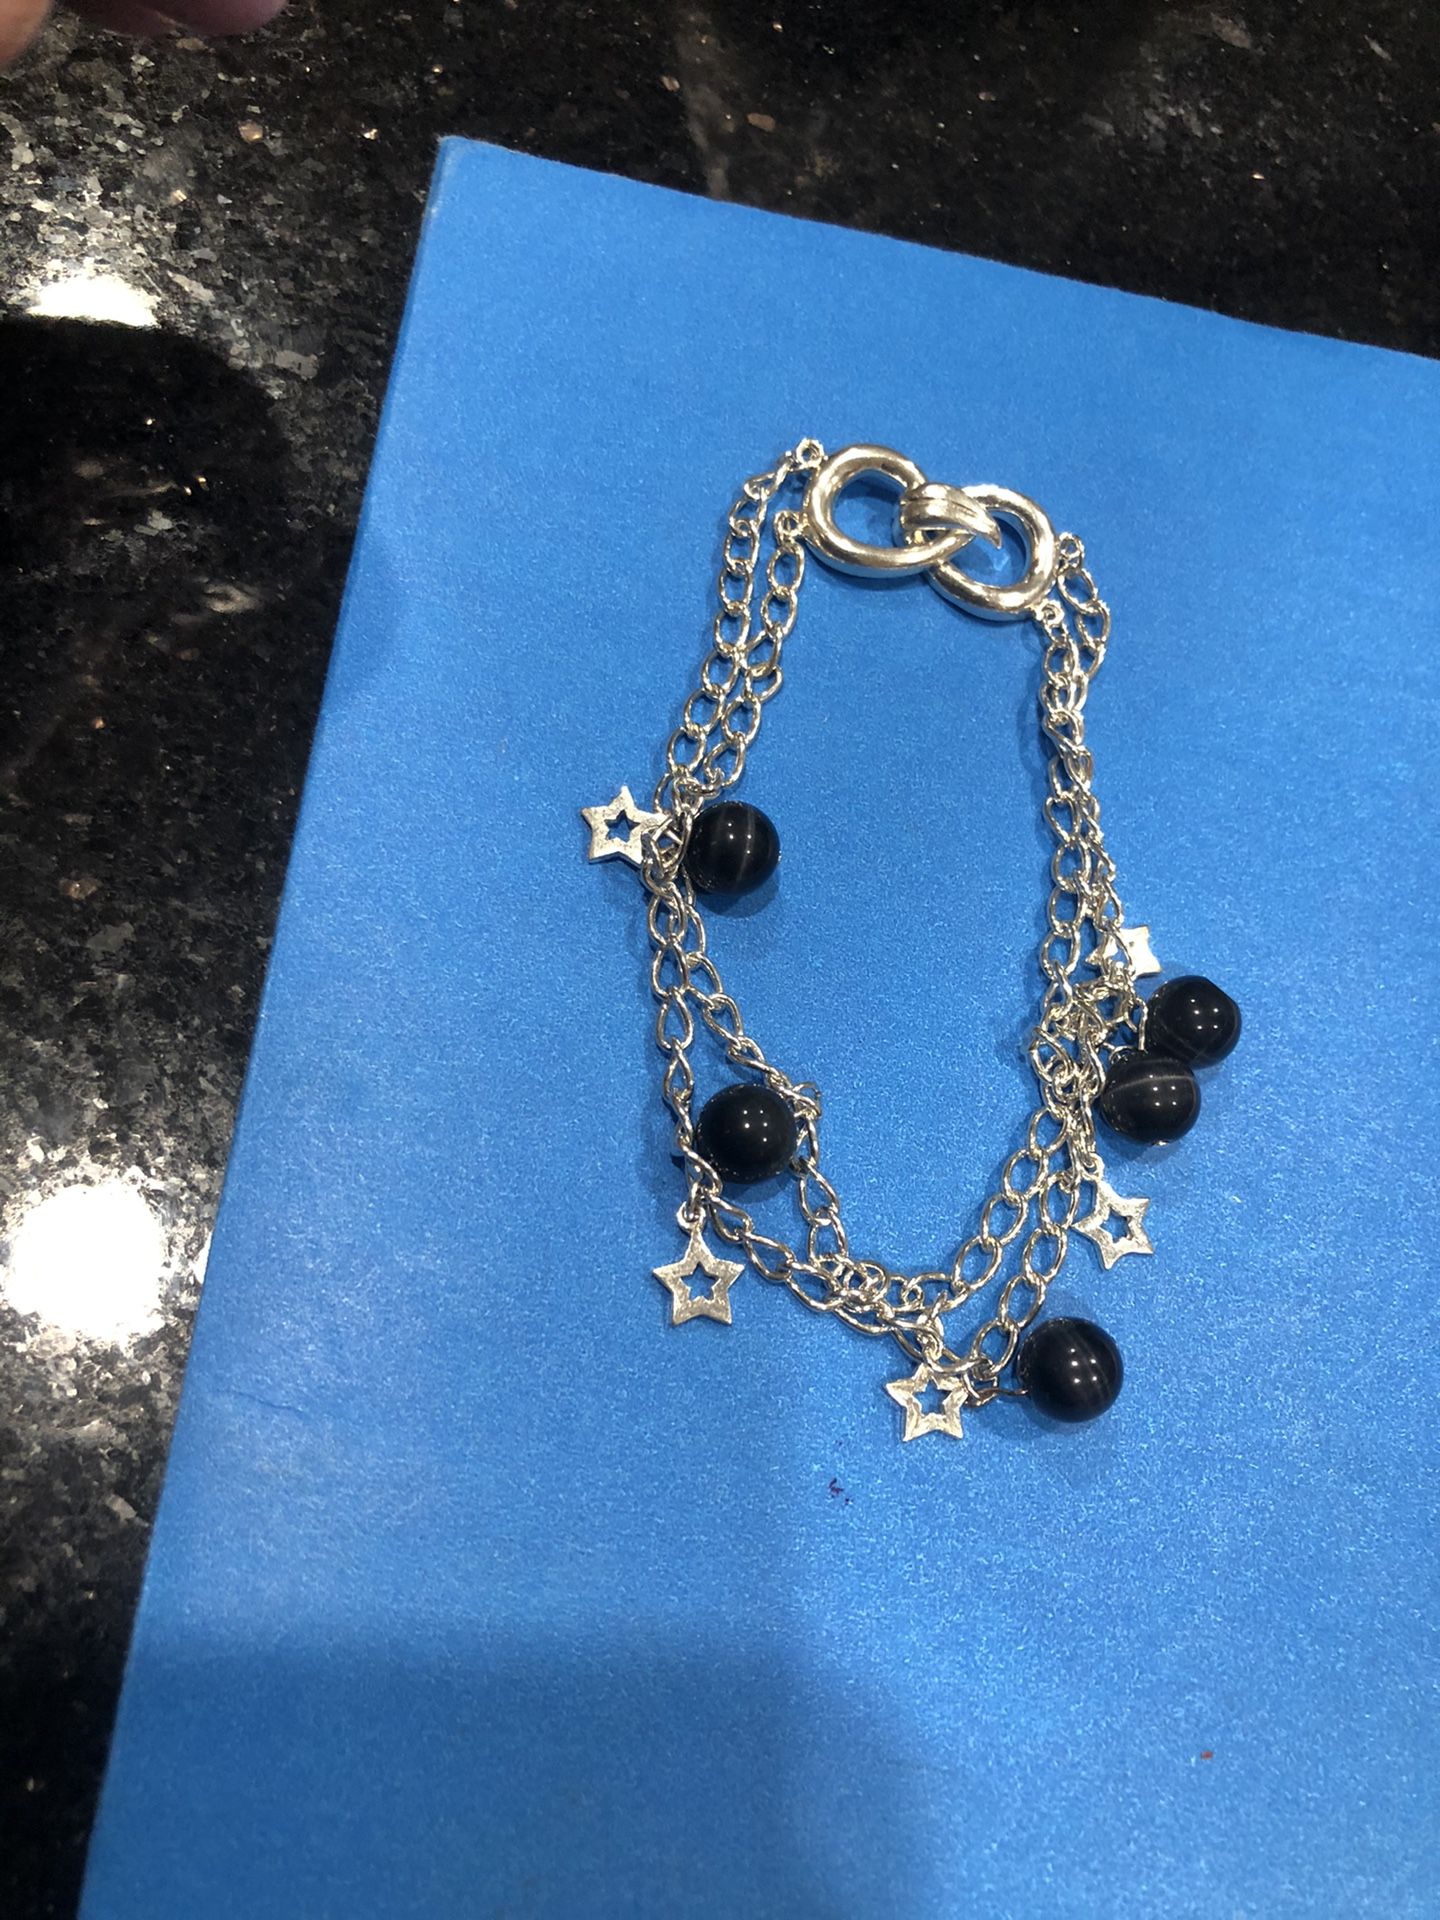 Bracelet ,925 silver Star charms & Moonstone,8.5”